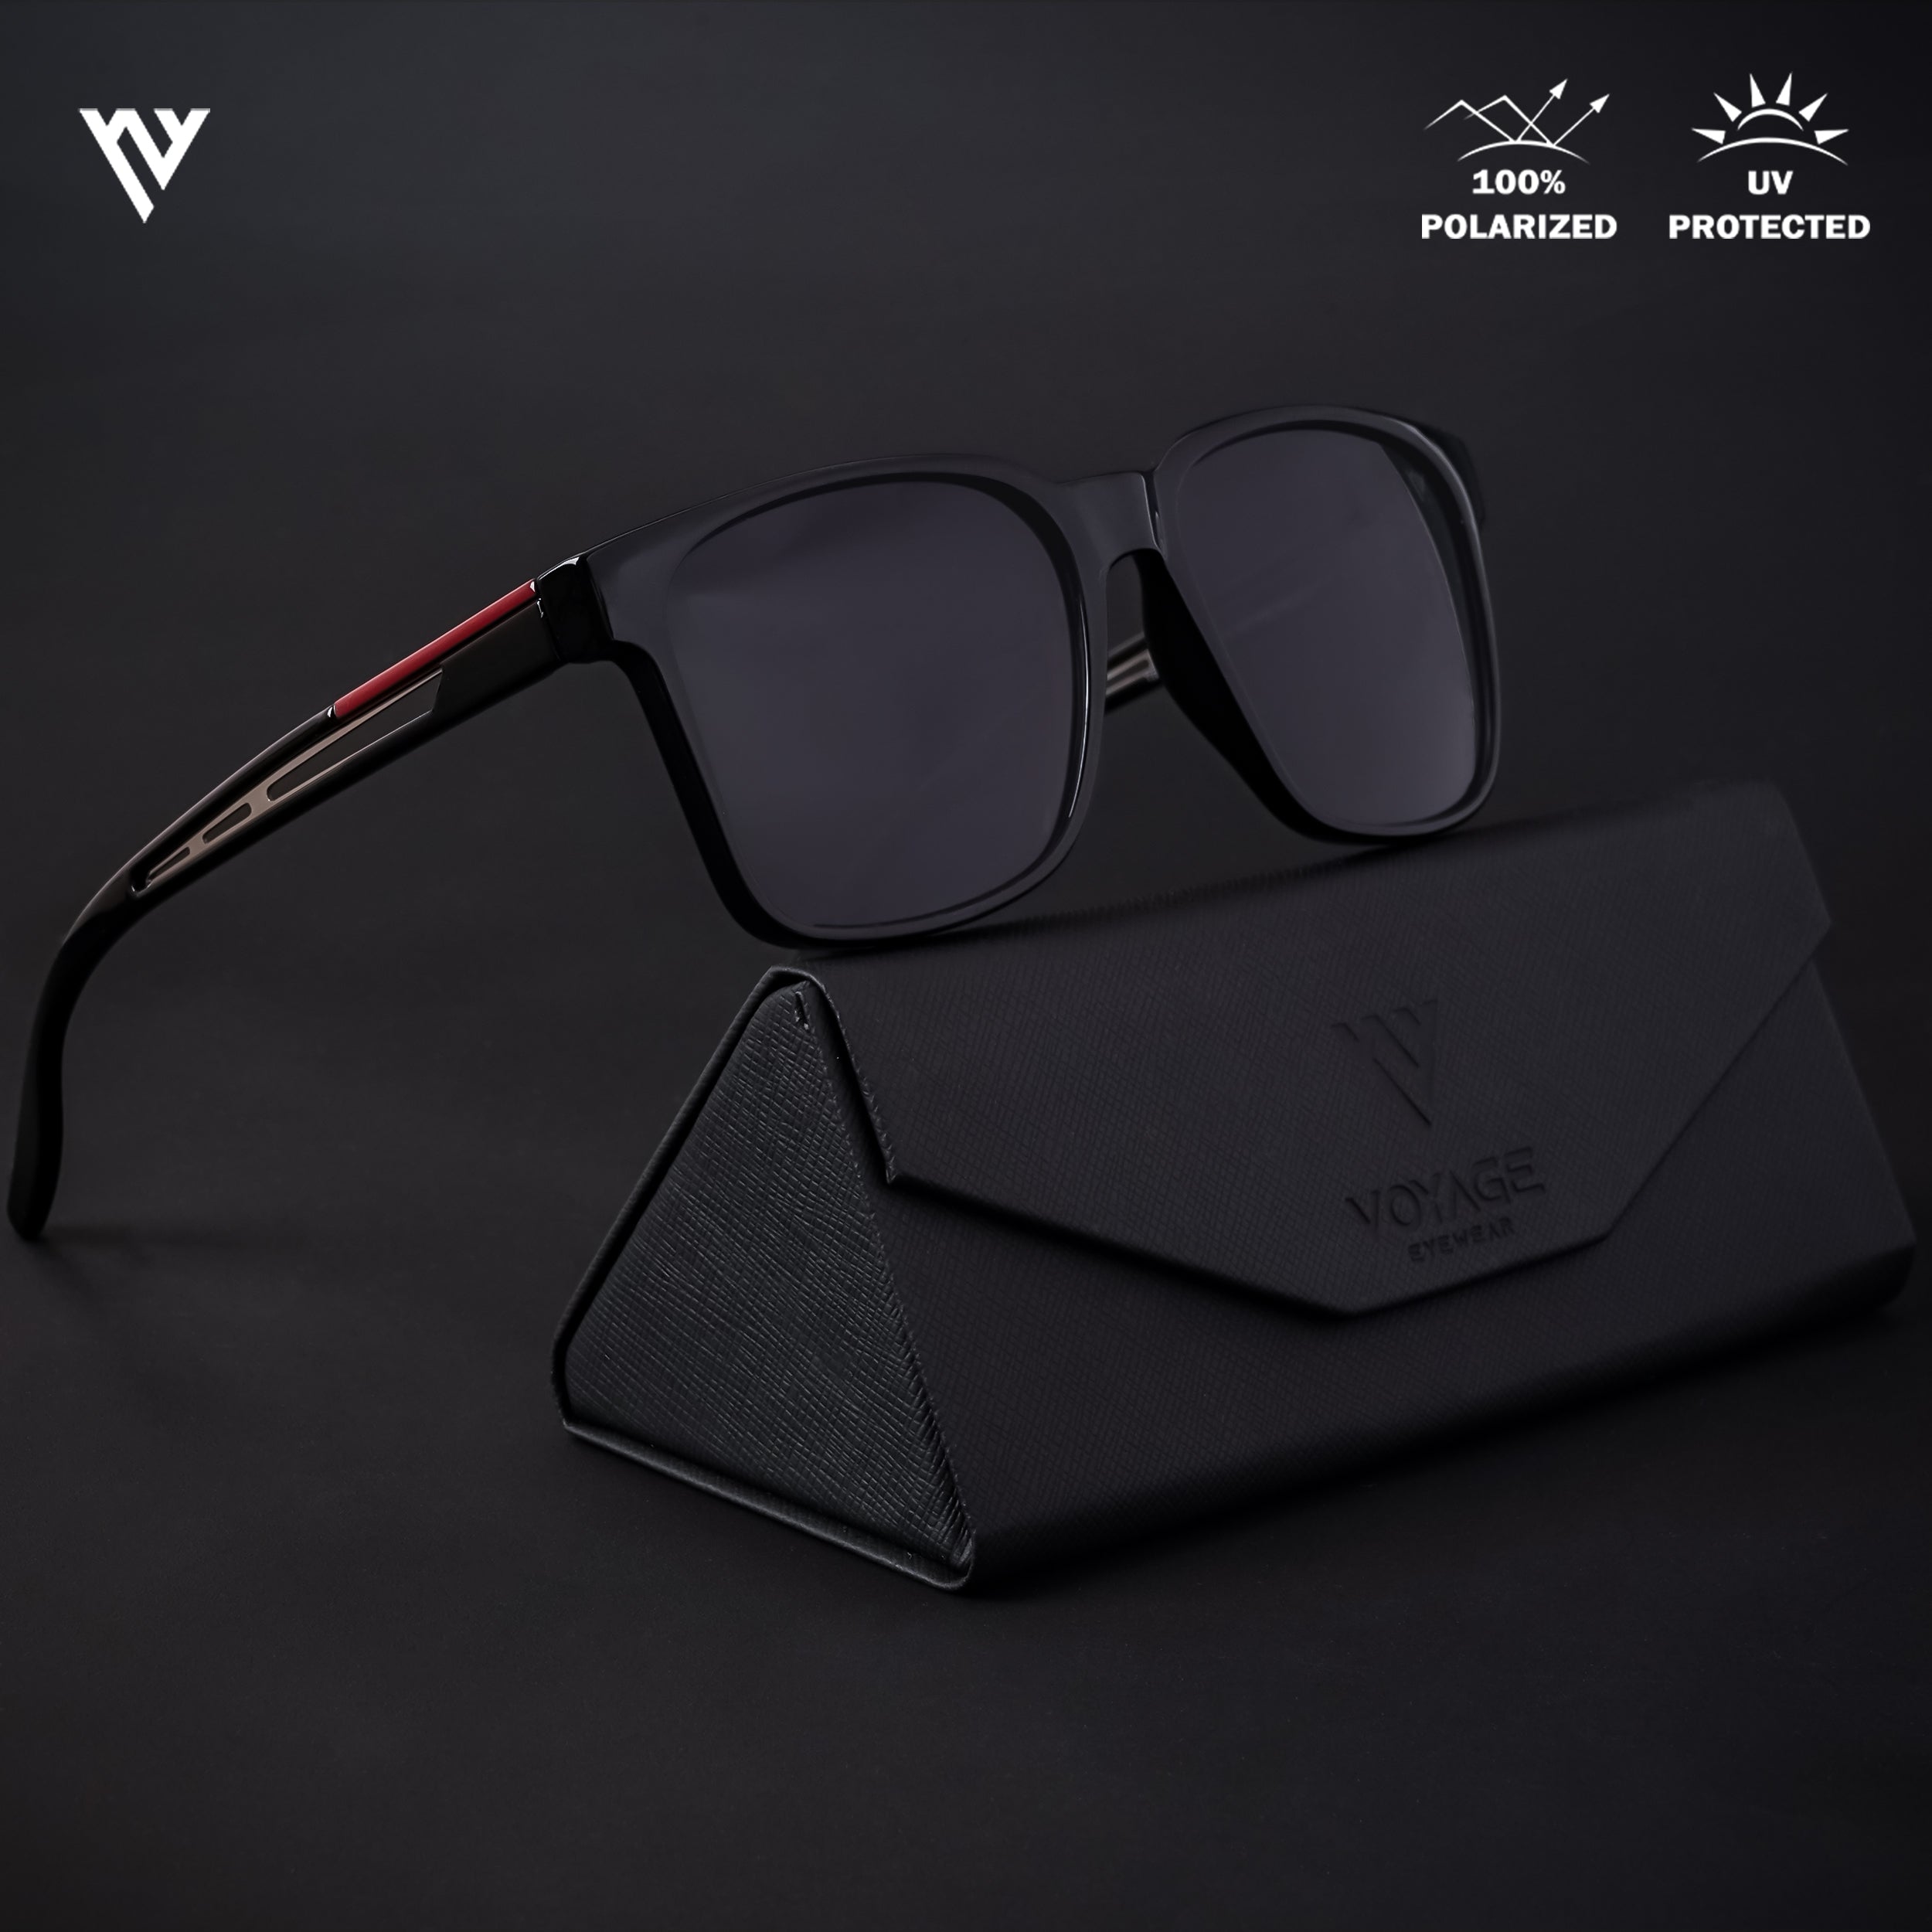 Voyage Exclusive Shine Black Polarized Wayfarer Sunglasses for Men & Women - PMG4487